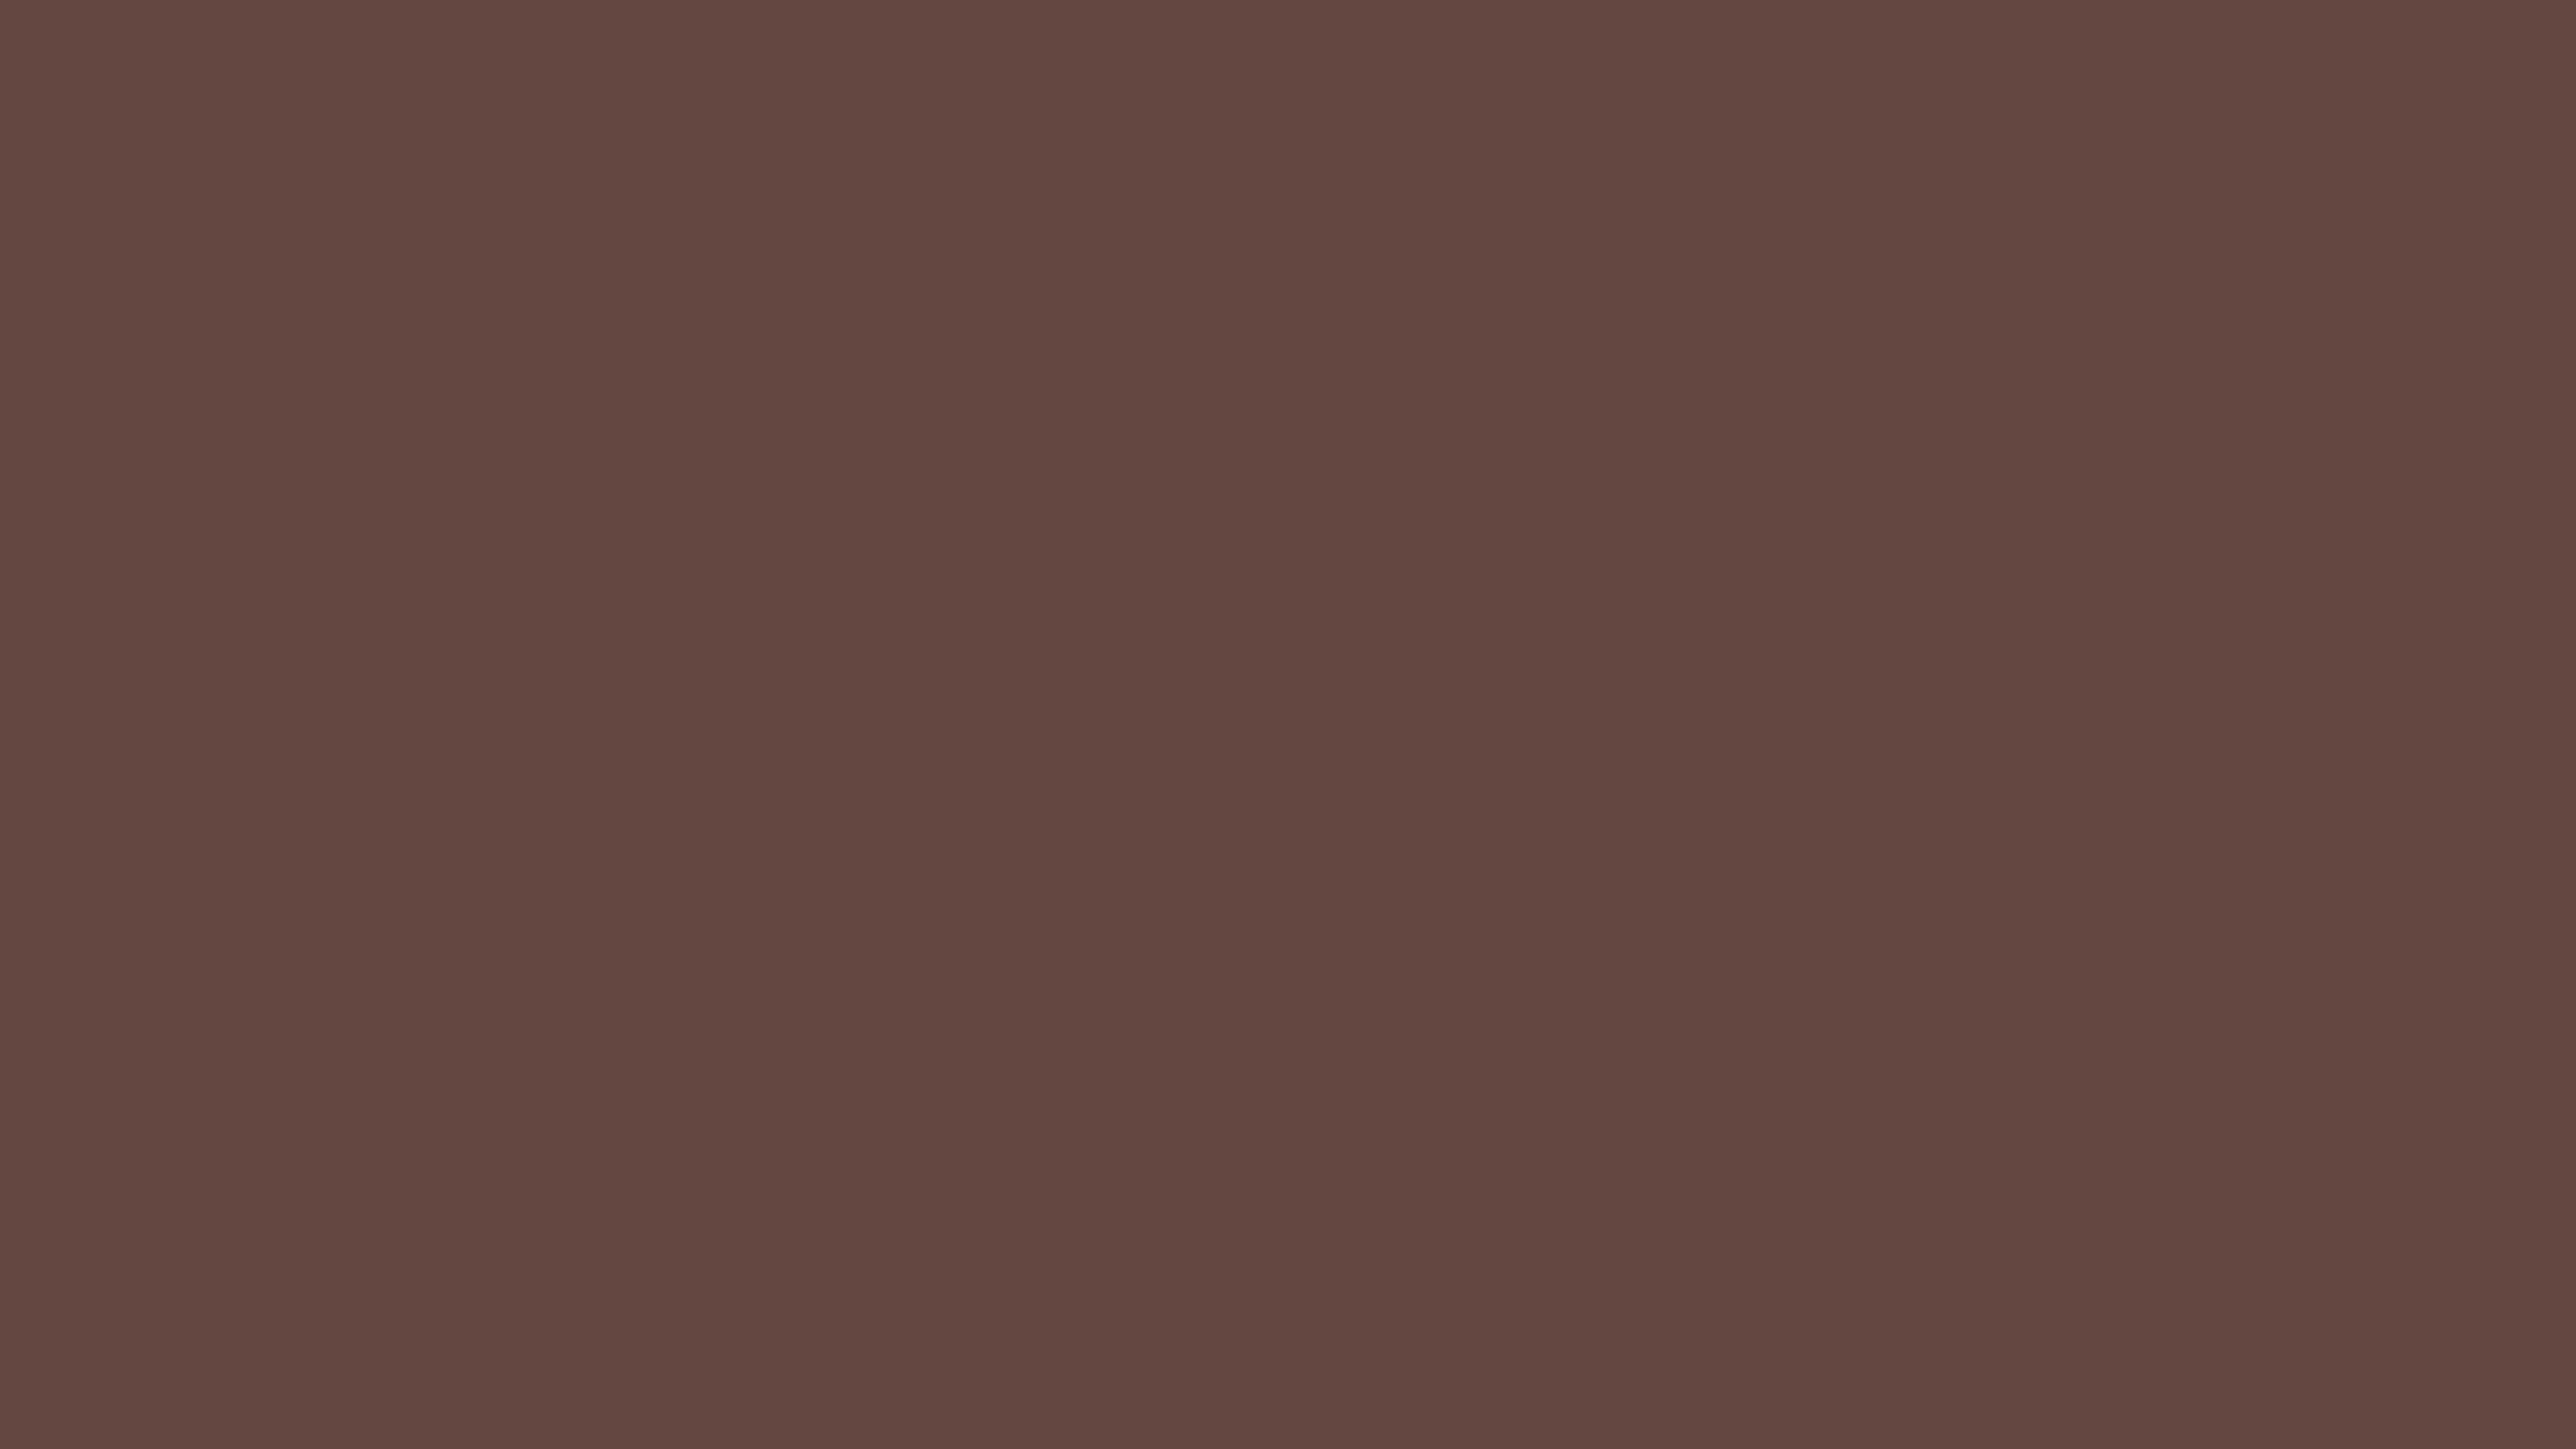 Gorthor Brown Solid Color Background Image | Free Image Generator